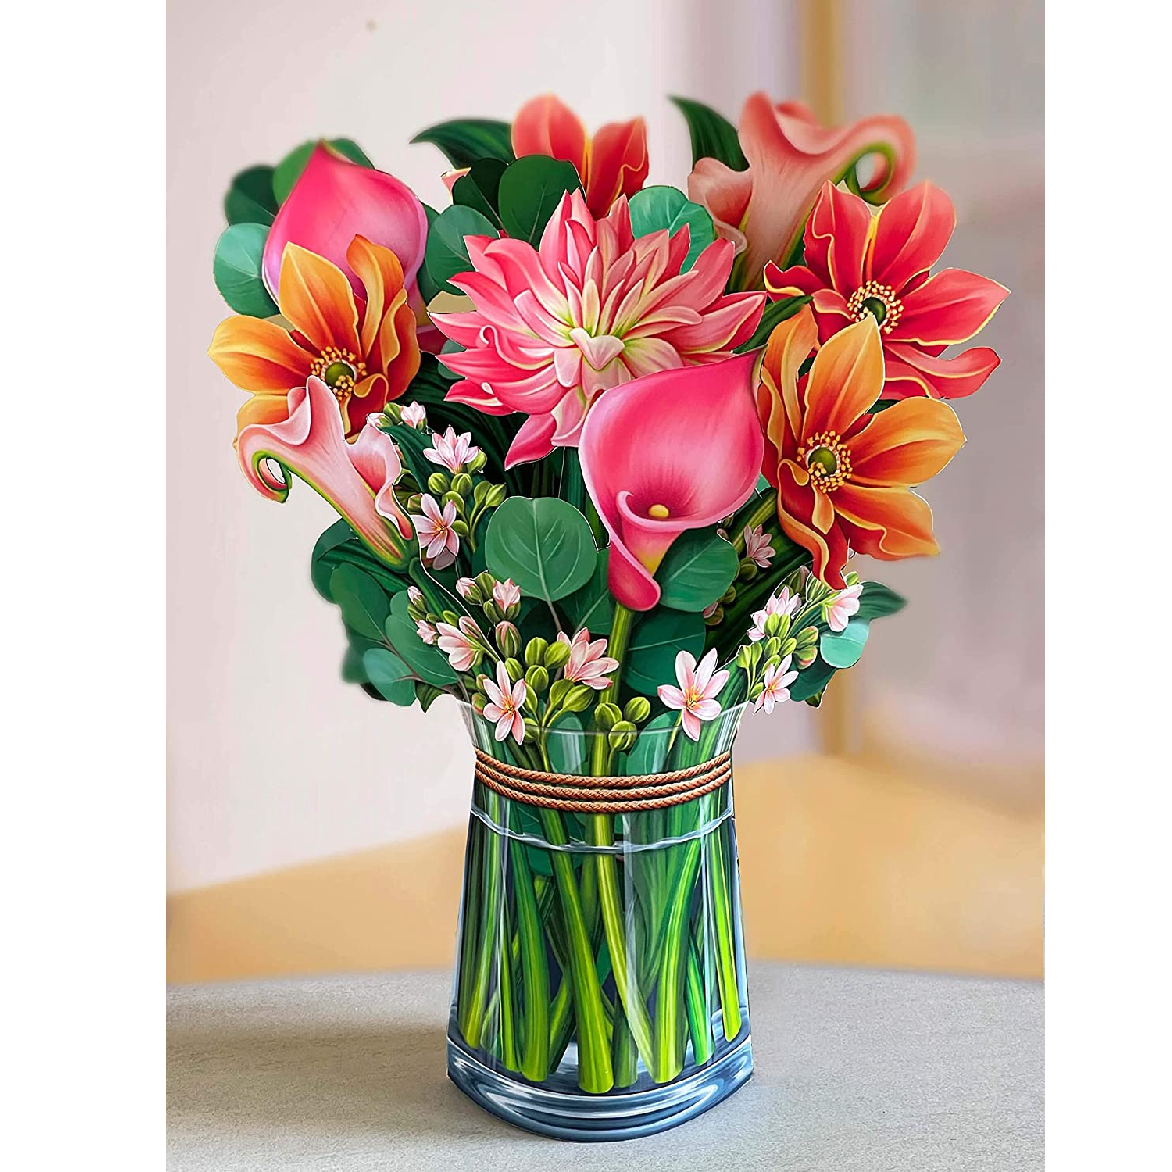 Flower Bouquet Pop Up Cards - 3D Greeting Card - Dahlia